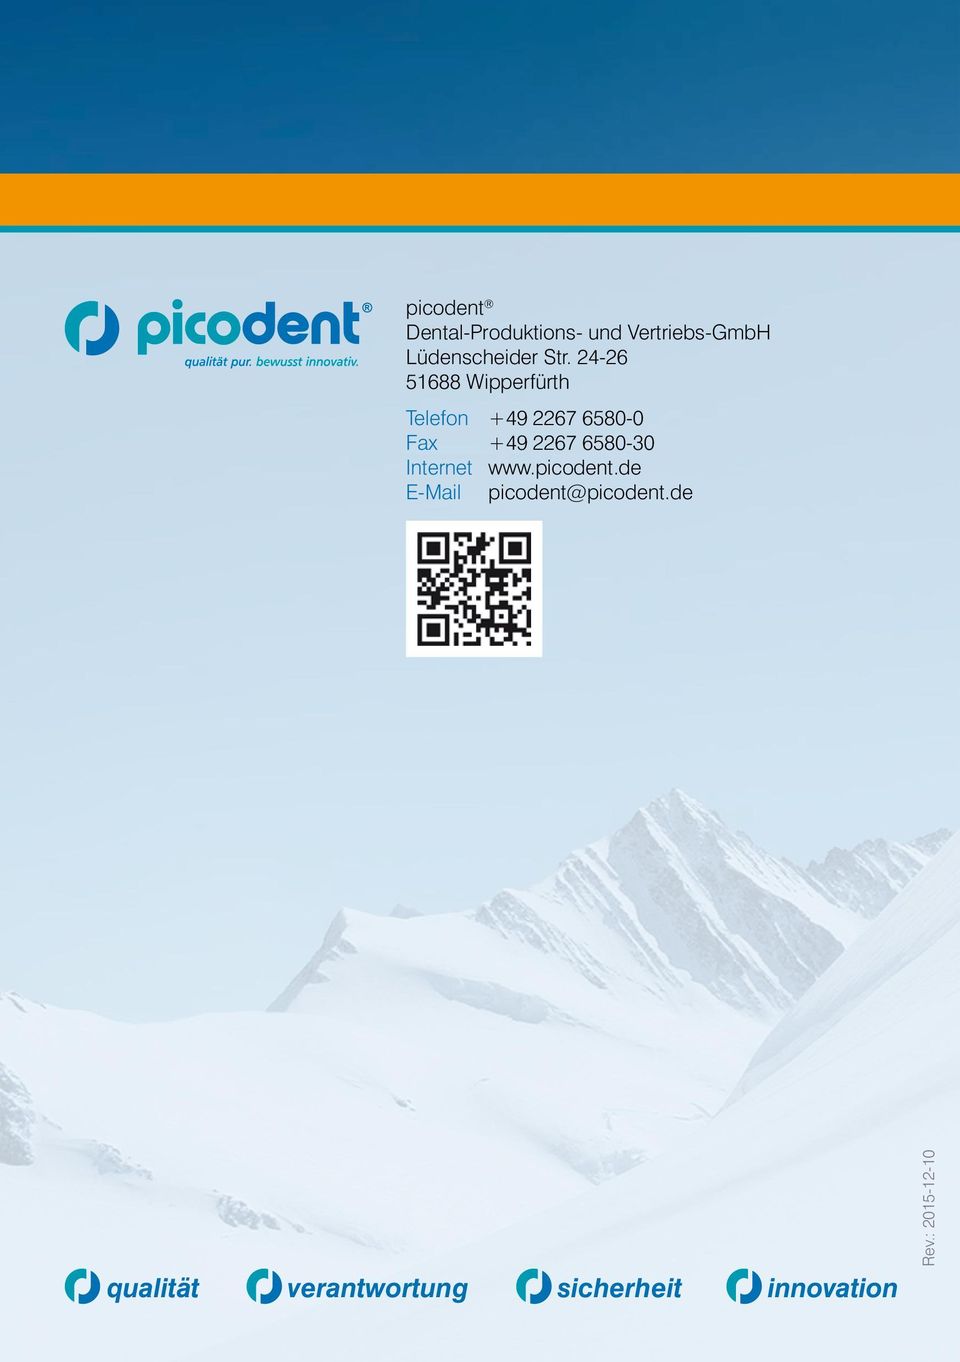 2267 6580-30 Internet www.picodent.de E-Mail picodent@picodent.